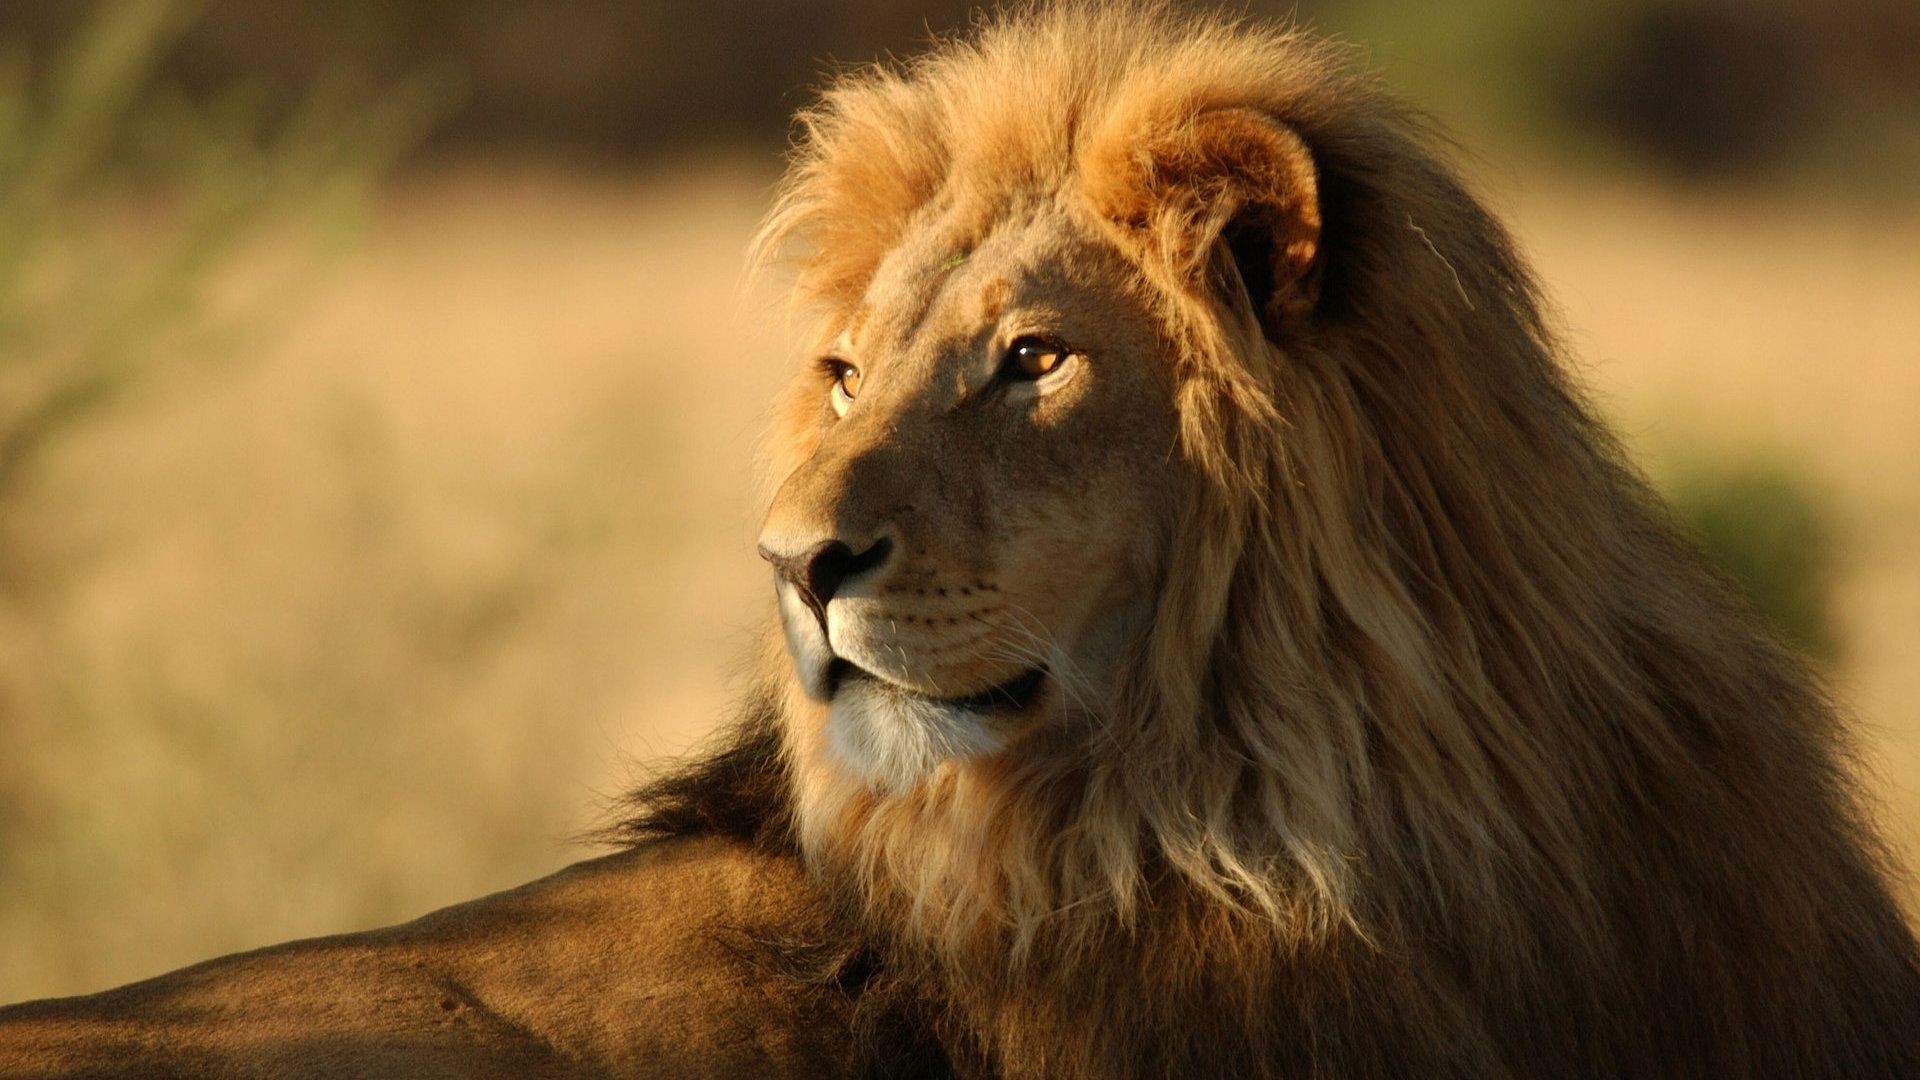 lions lion cat wildlife mammal portrait animal mane safari nature wild zoo fur predator